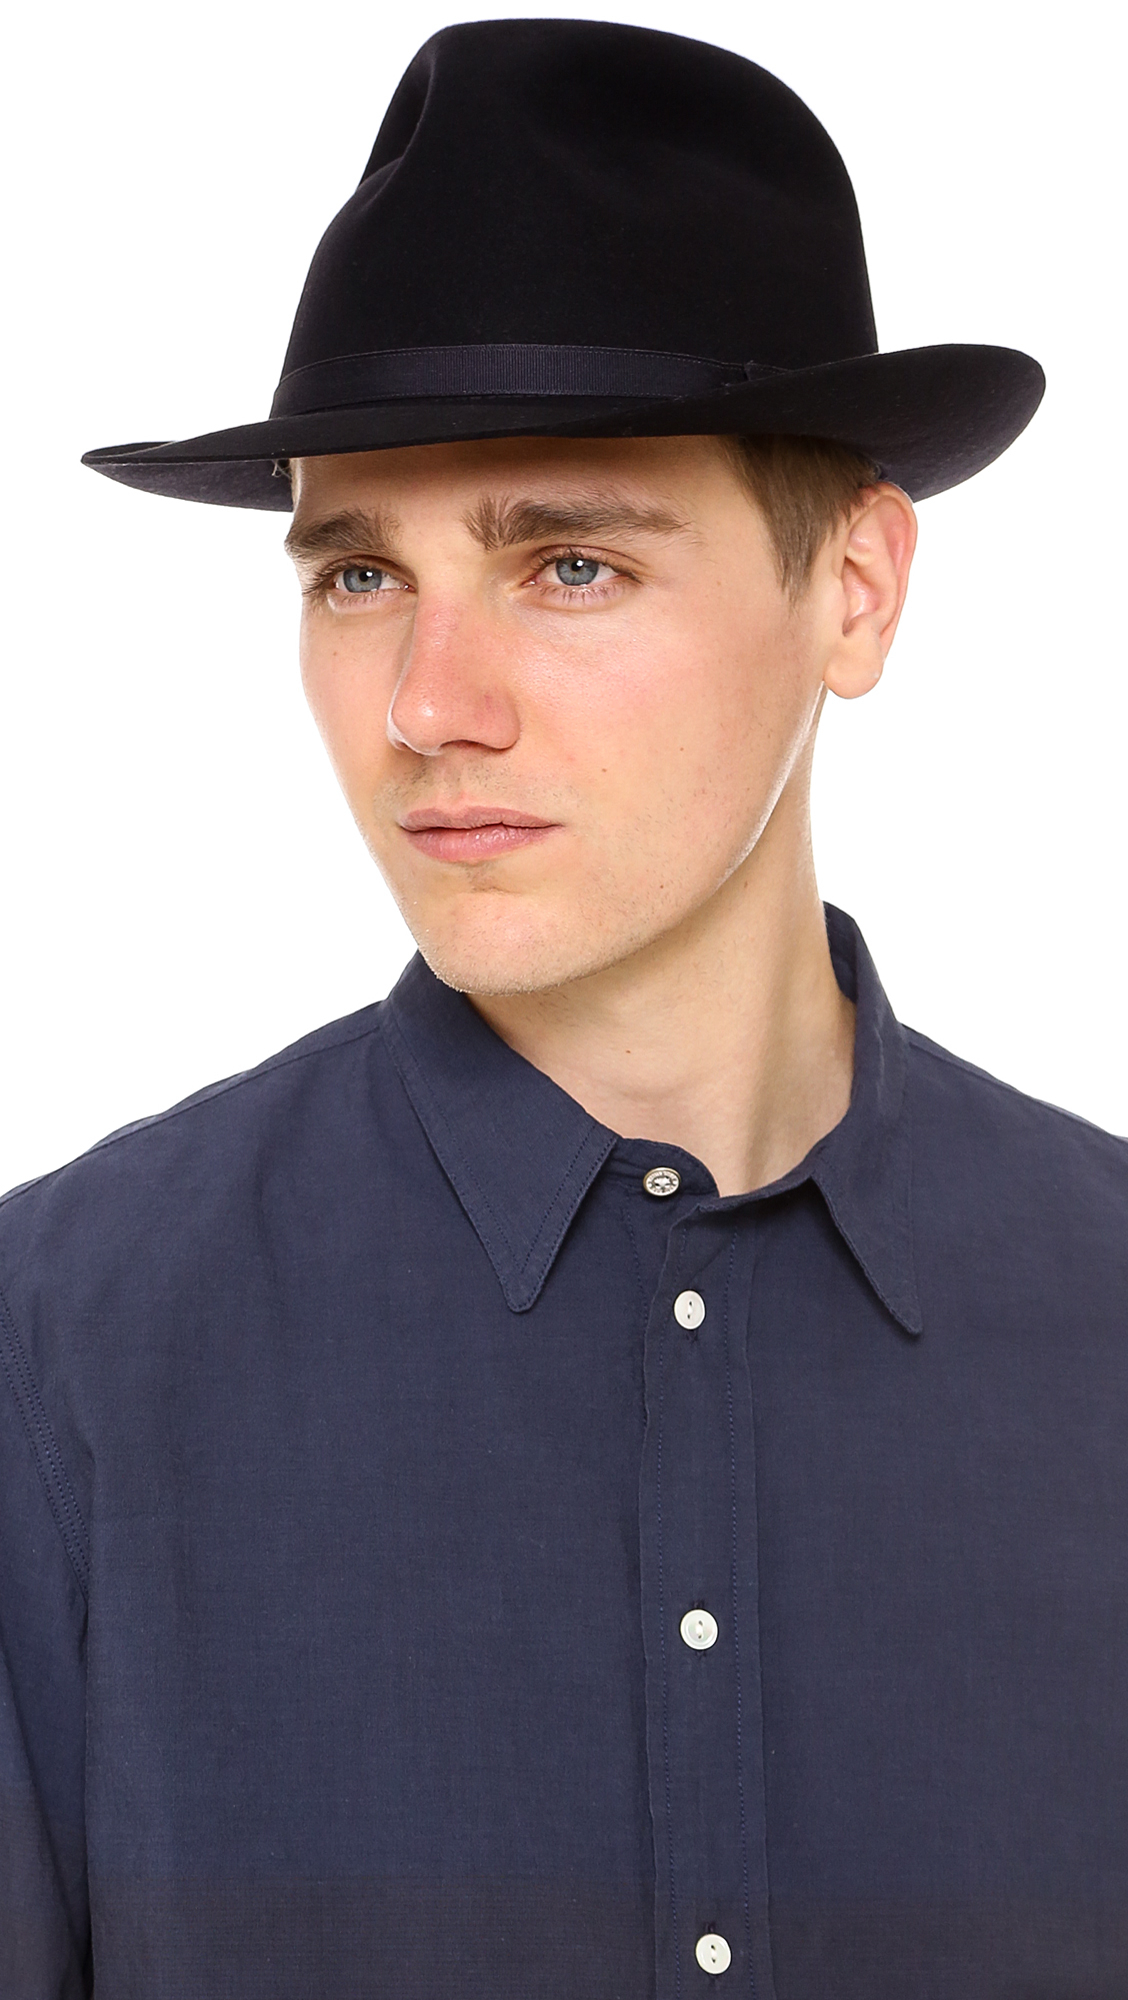 Lyst - Lock & Co. Voyager Felt Hat in Blue for Men